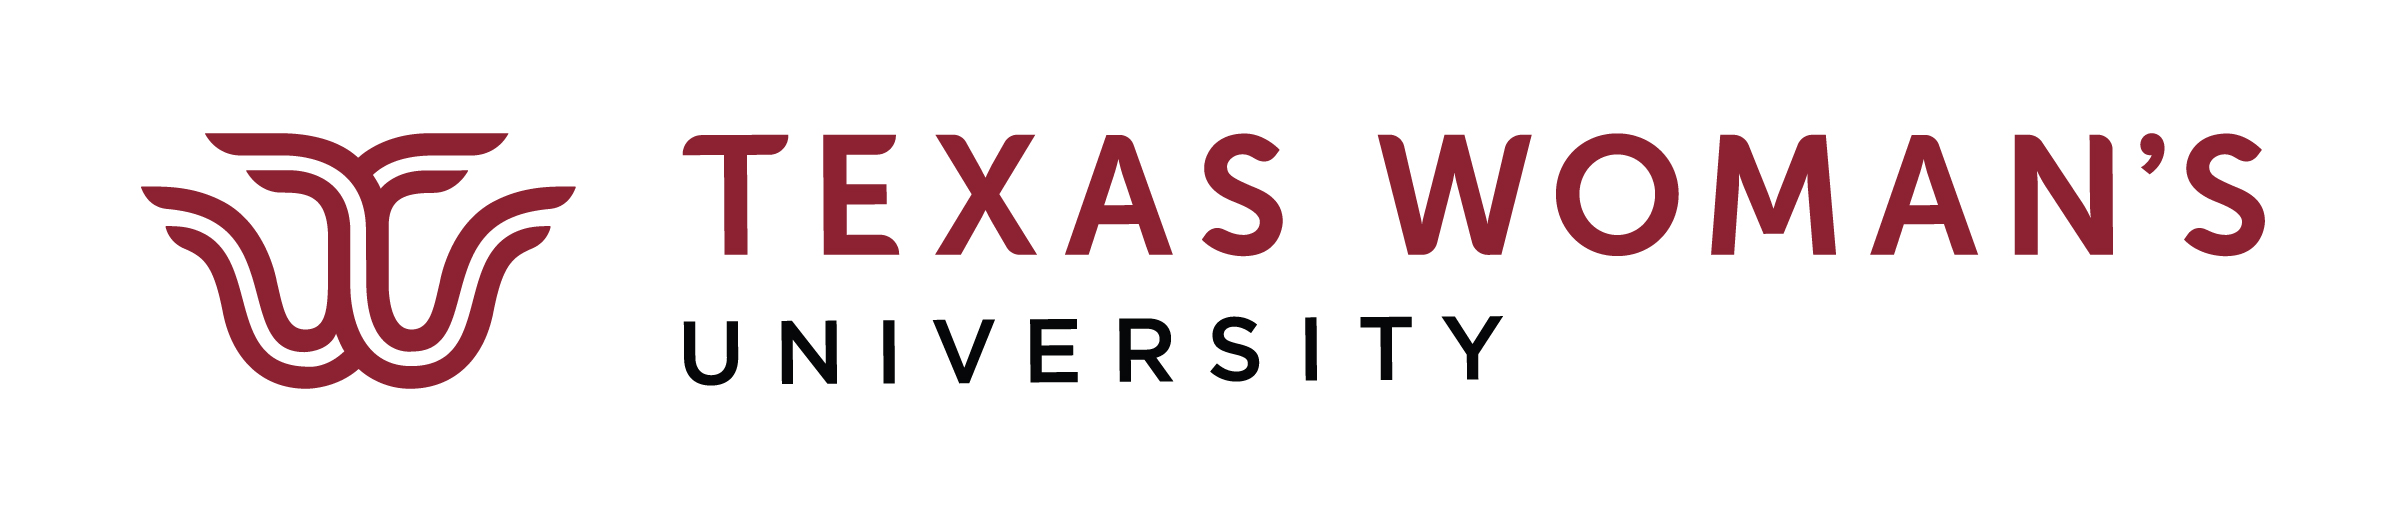 Texas Woman's University - Houston